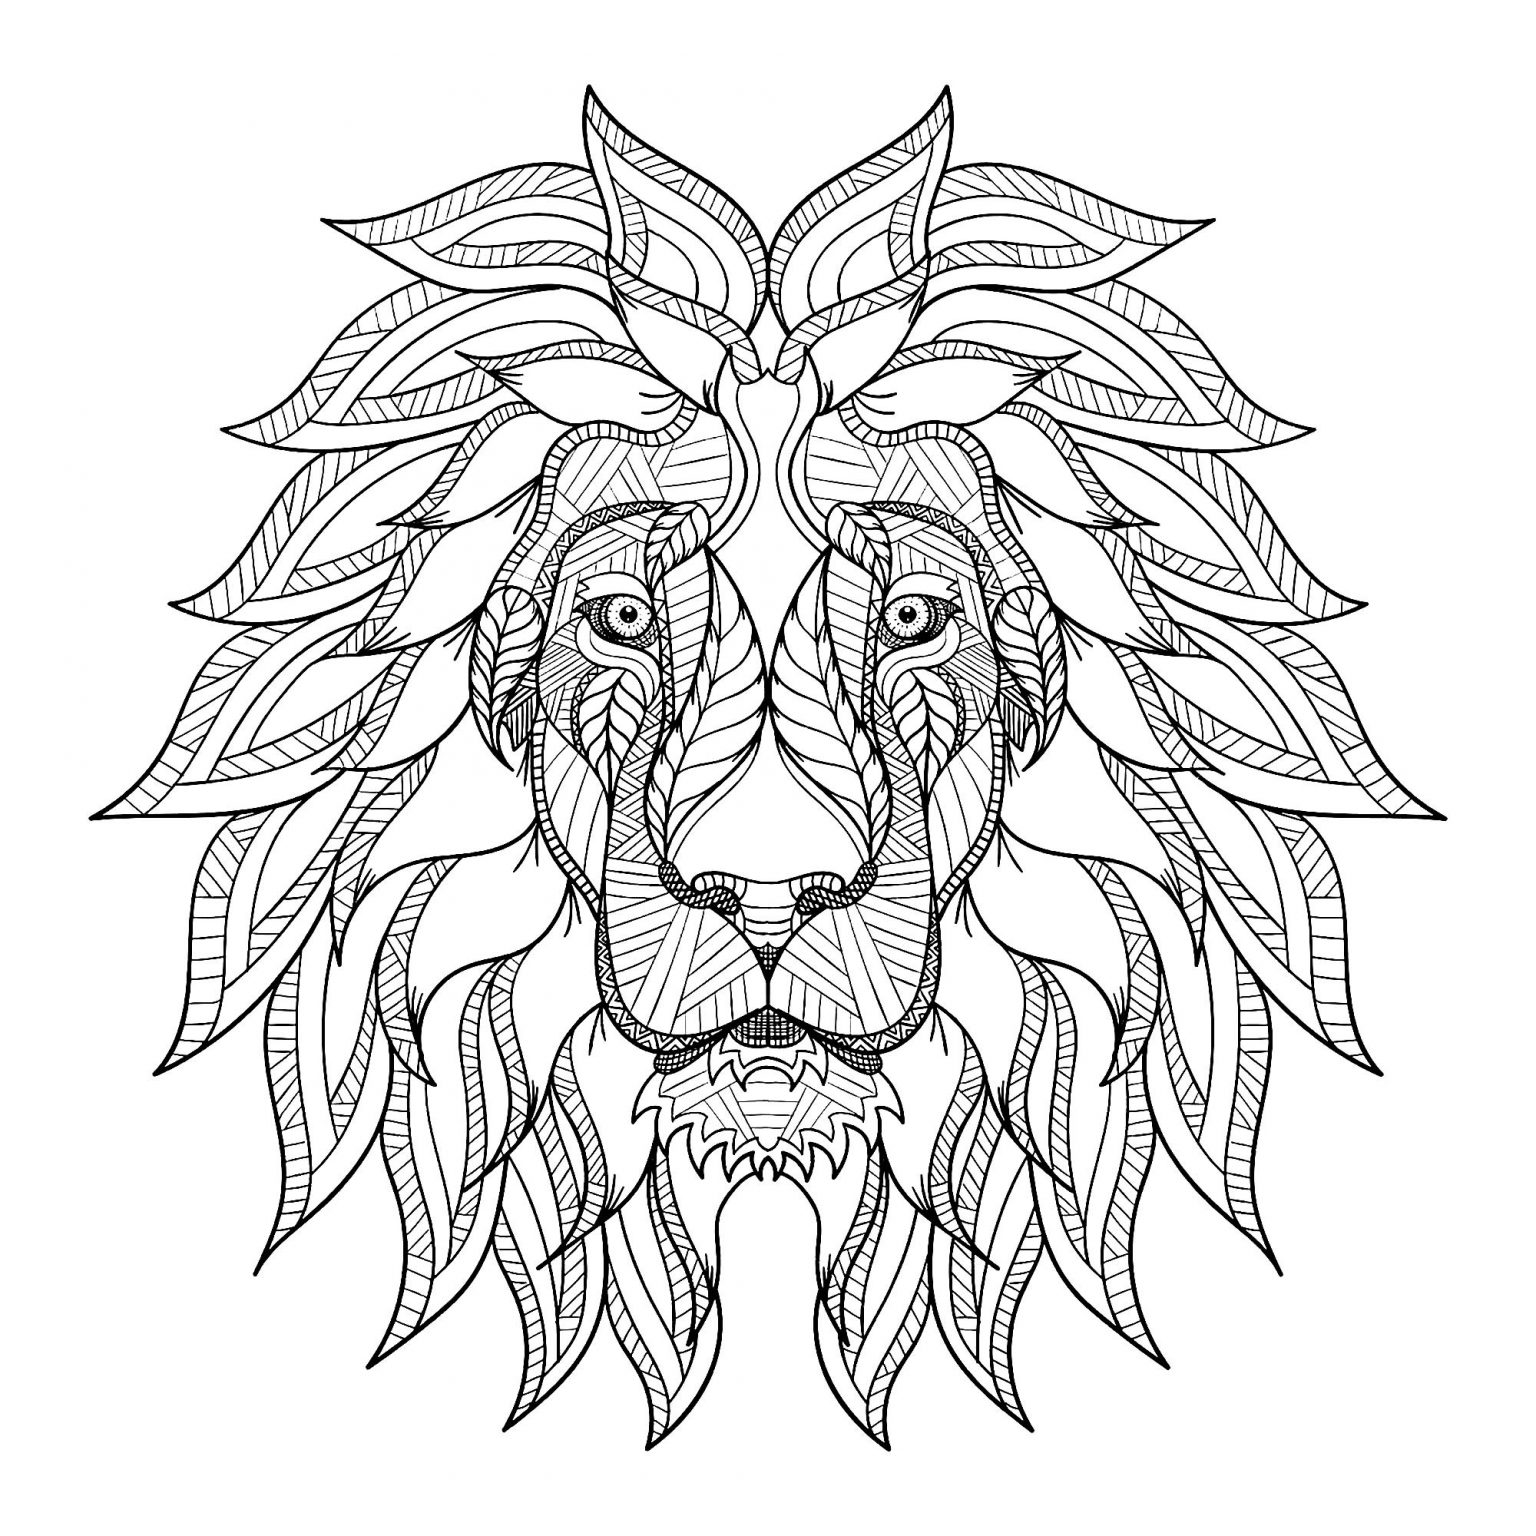 Coloriage Lion Facile Inspiration Lion Head with Big Mane Lions Adult Coloring Pages